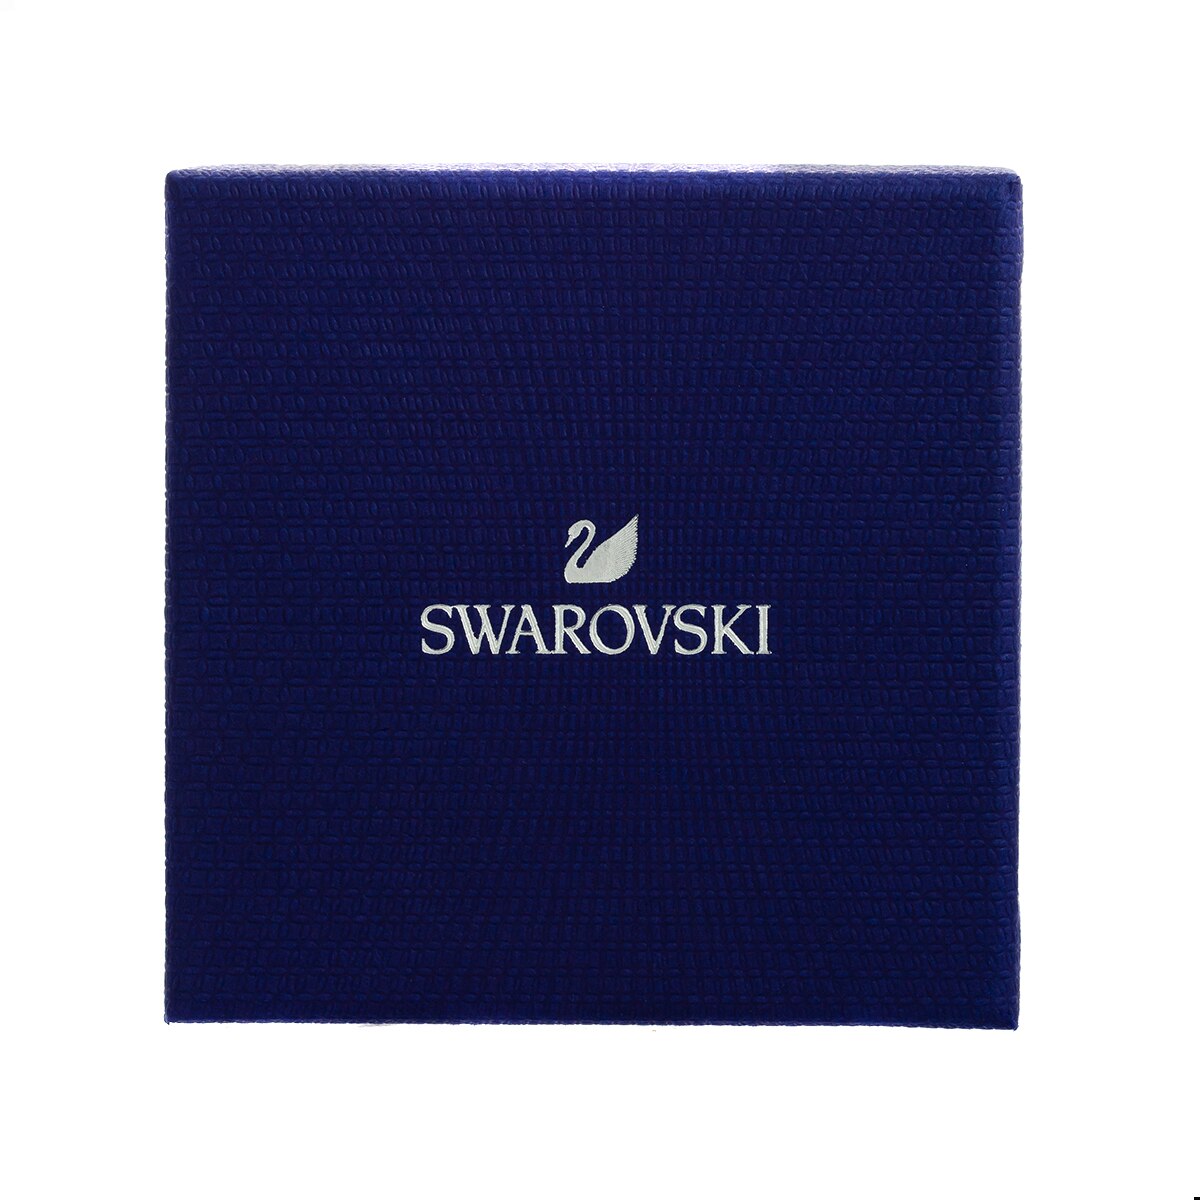 Swarovski Iconic Swan Bangle Gold Tone